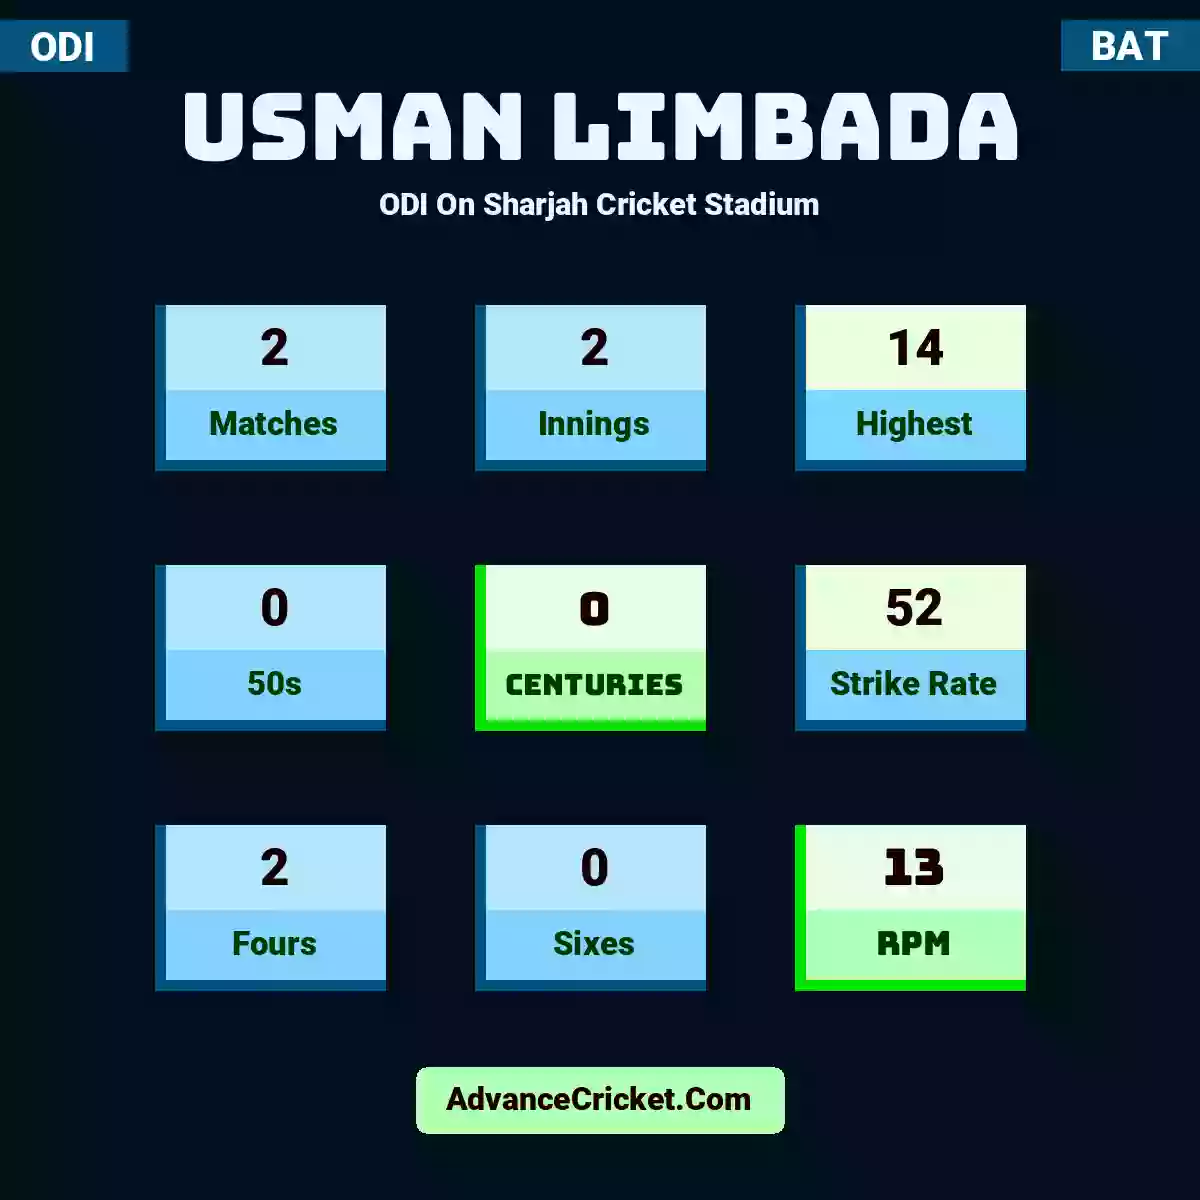 Usman Limbada ODI  On Sharjah Cricket Stadium, Usman Limbada played 2 matches, scored 14 runs as highest, 0 half-centuries, and 0 centuries, with a strike rate of 52. U.Limbada hit 2 fours and 0 sixes, with an RPM of 13.